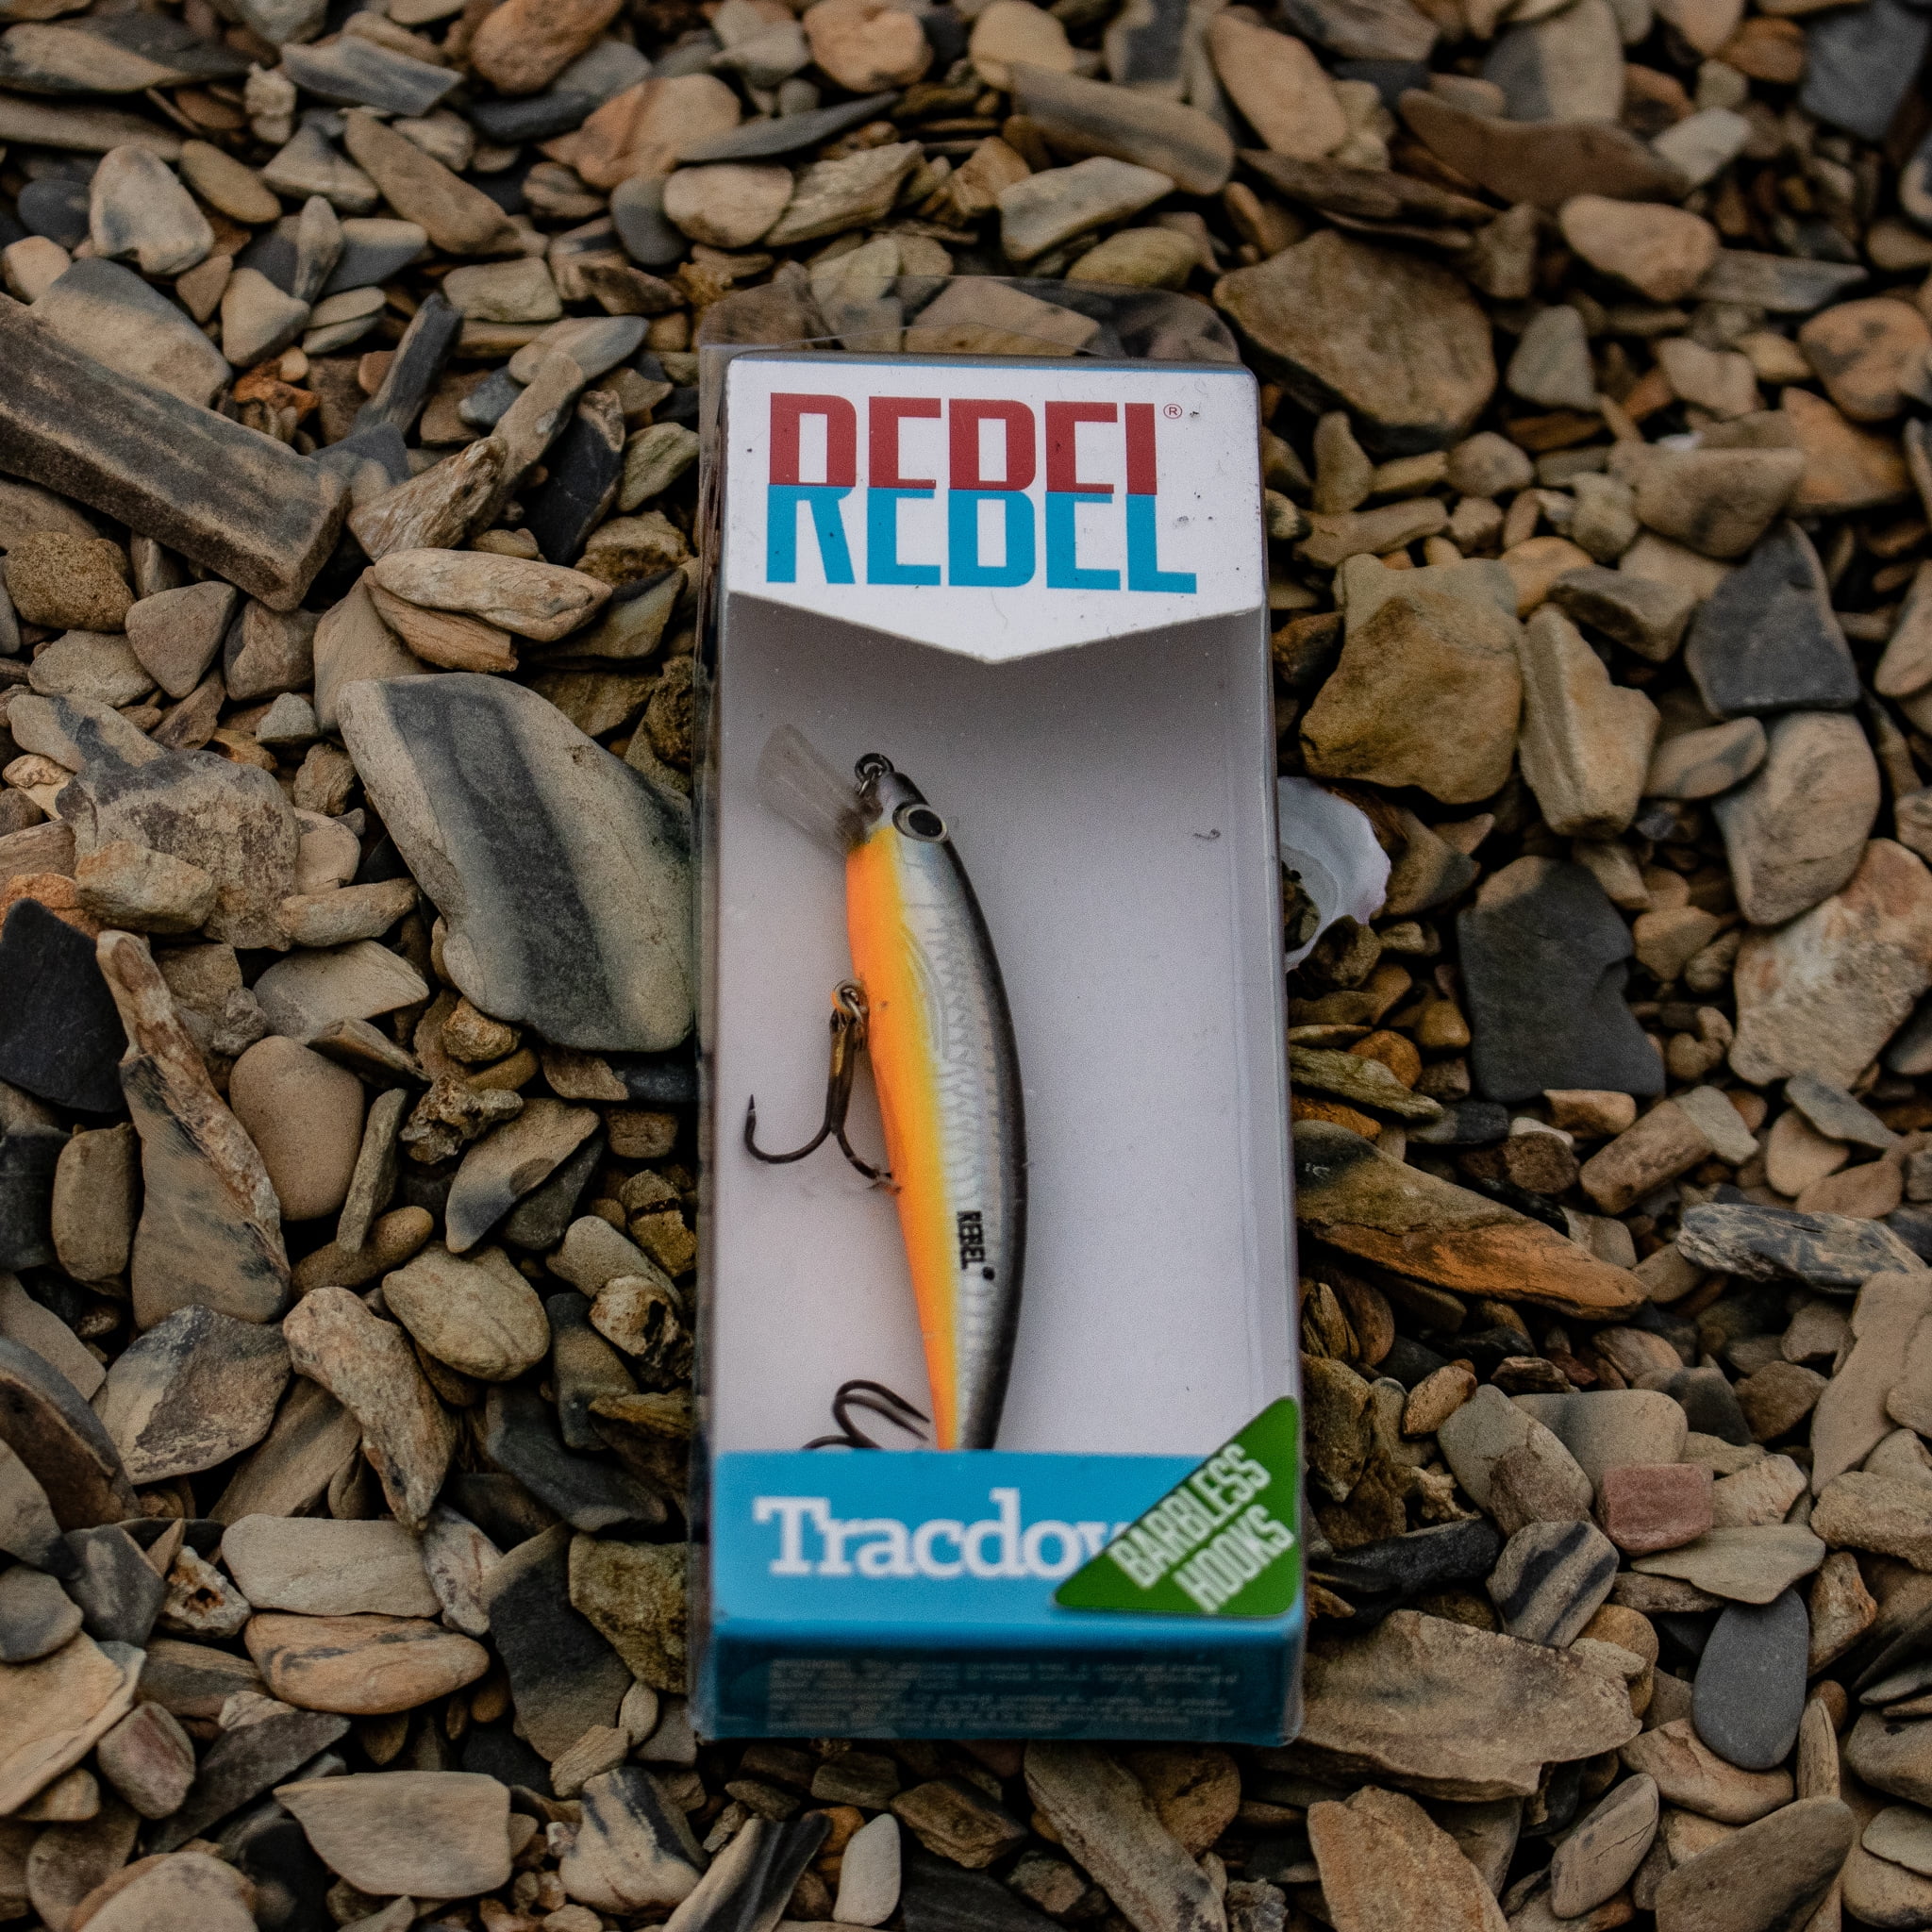 Rebel Tracdown Minnow Fishing Lure - Silver/Black Back - 1 5/8 in